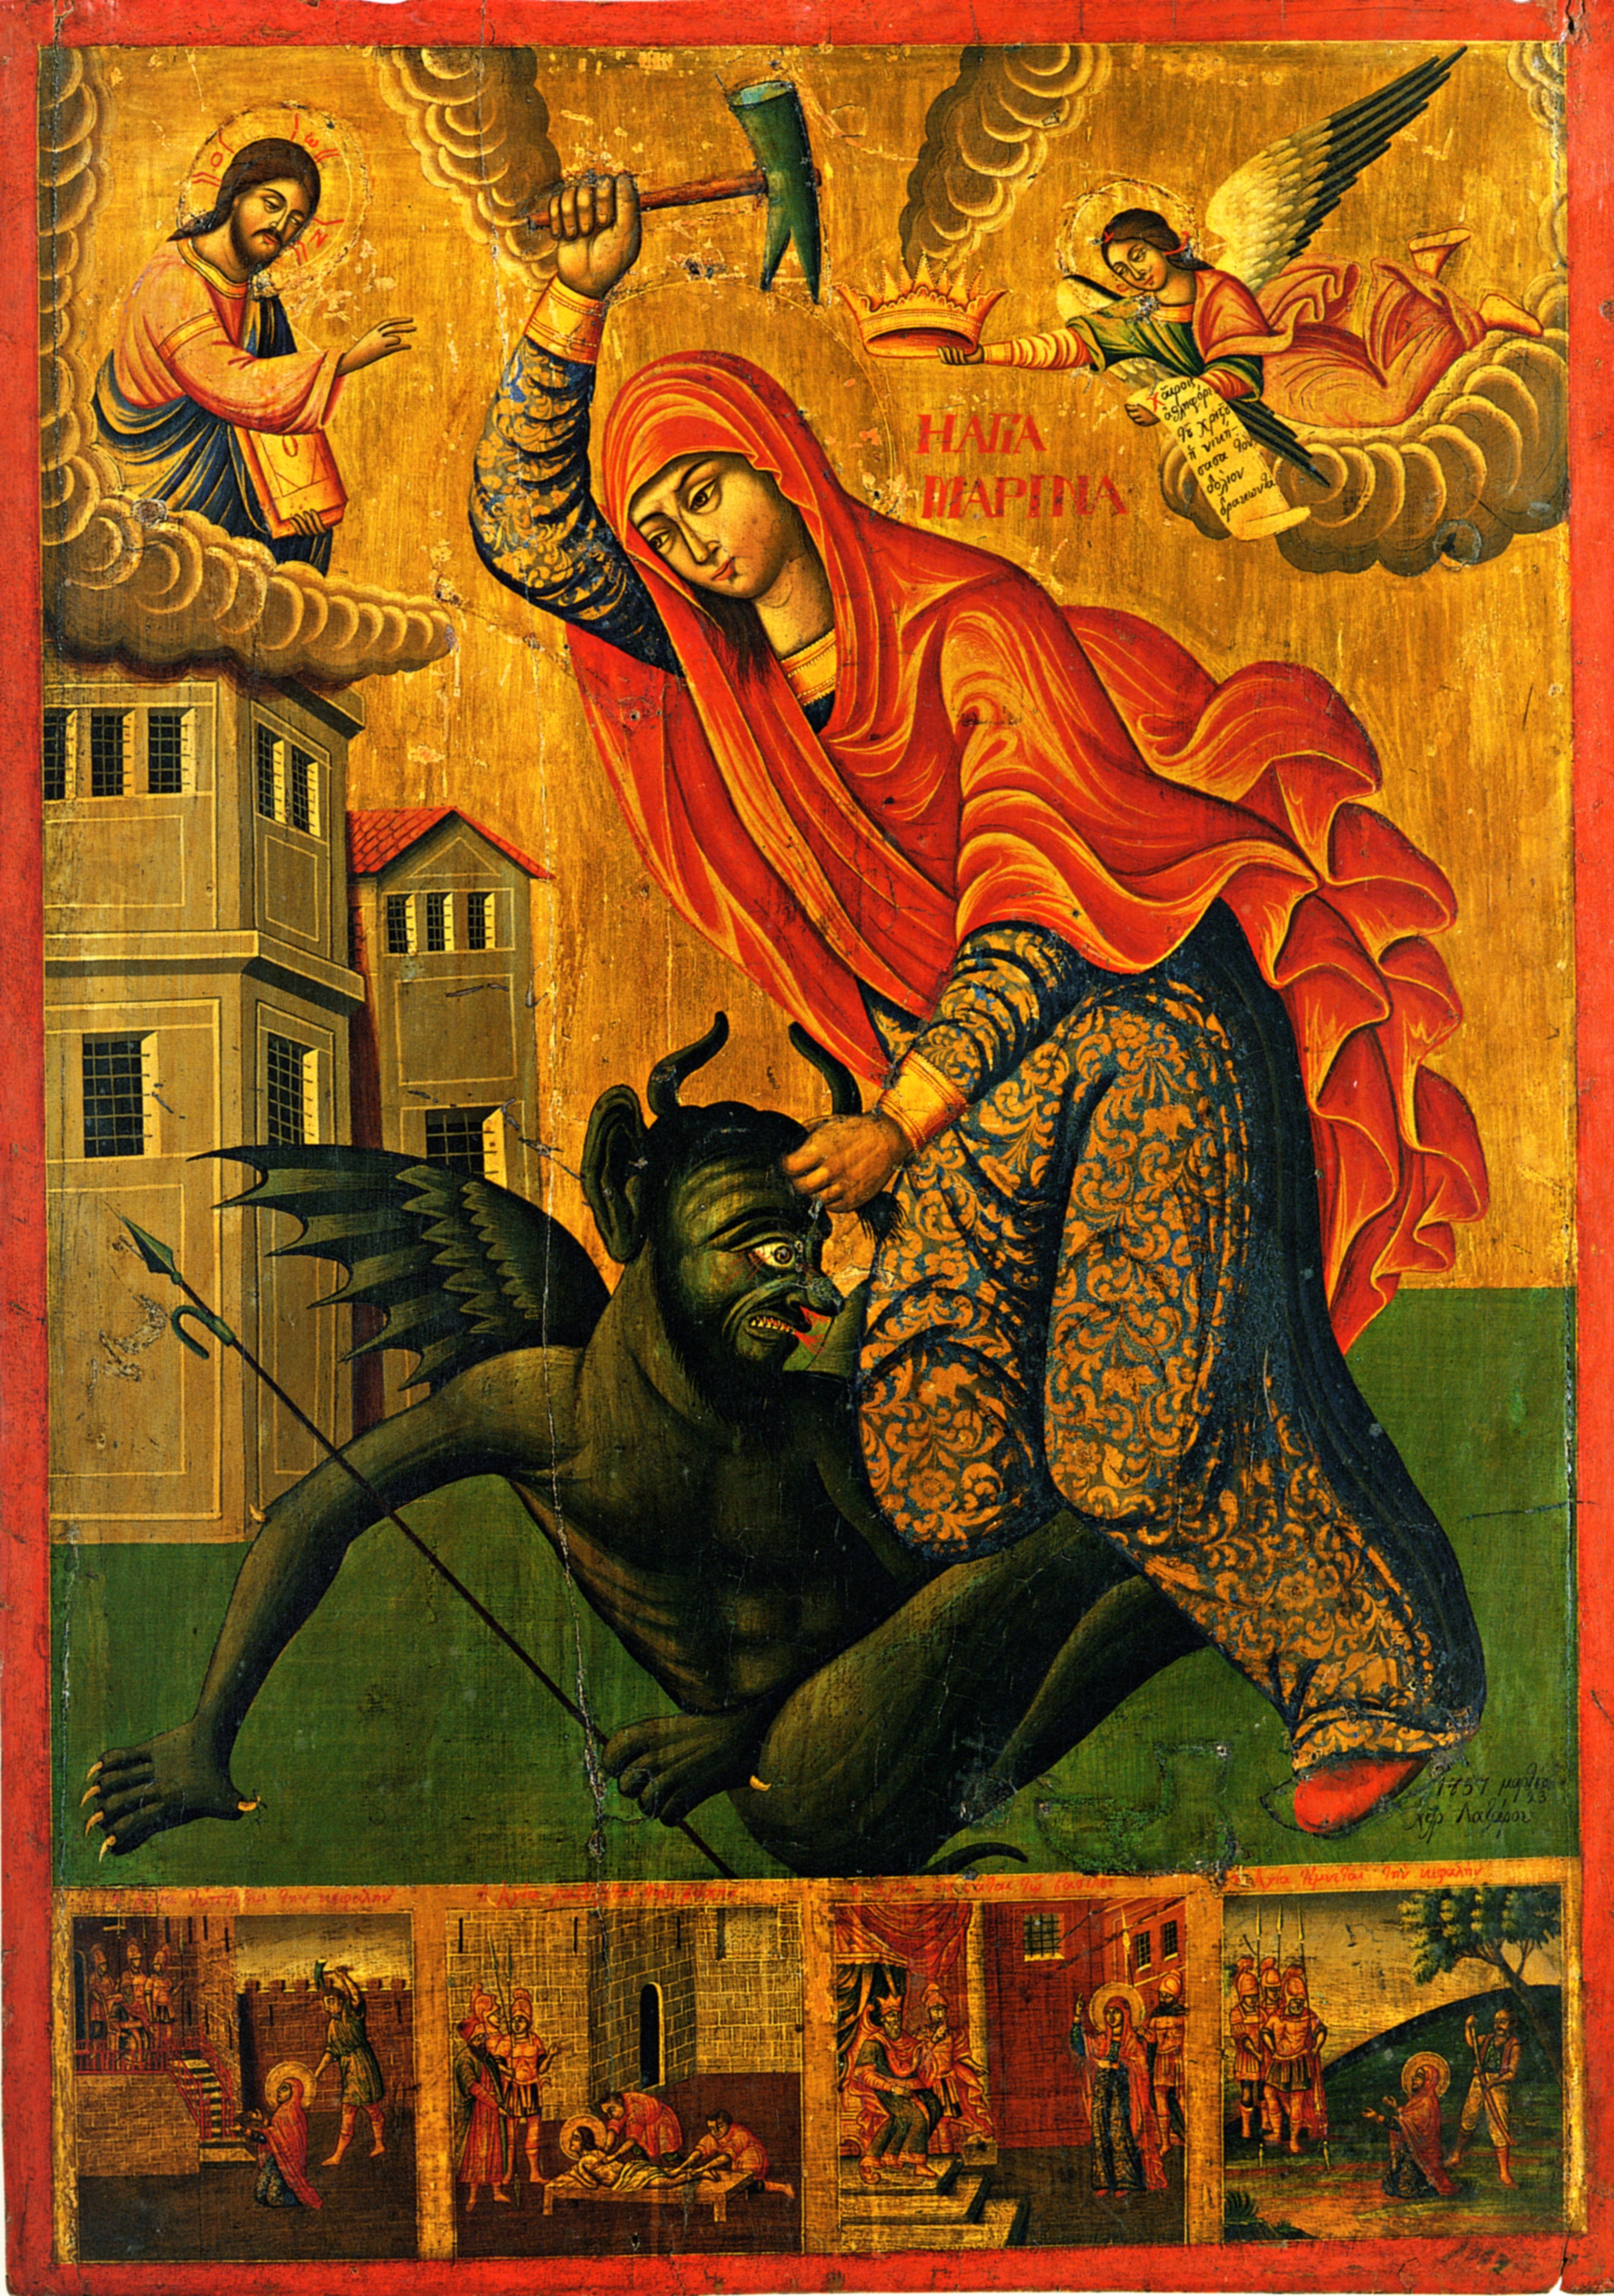 ST MARINA,DEVIL